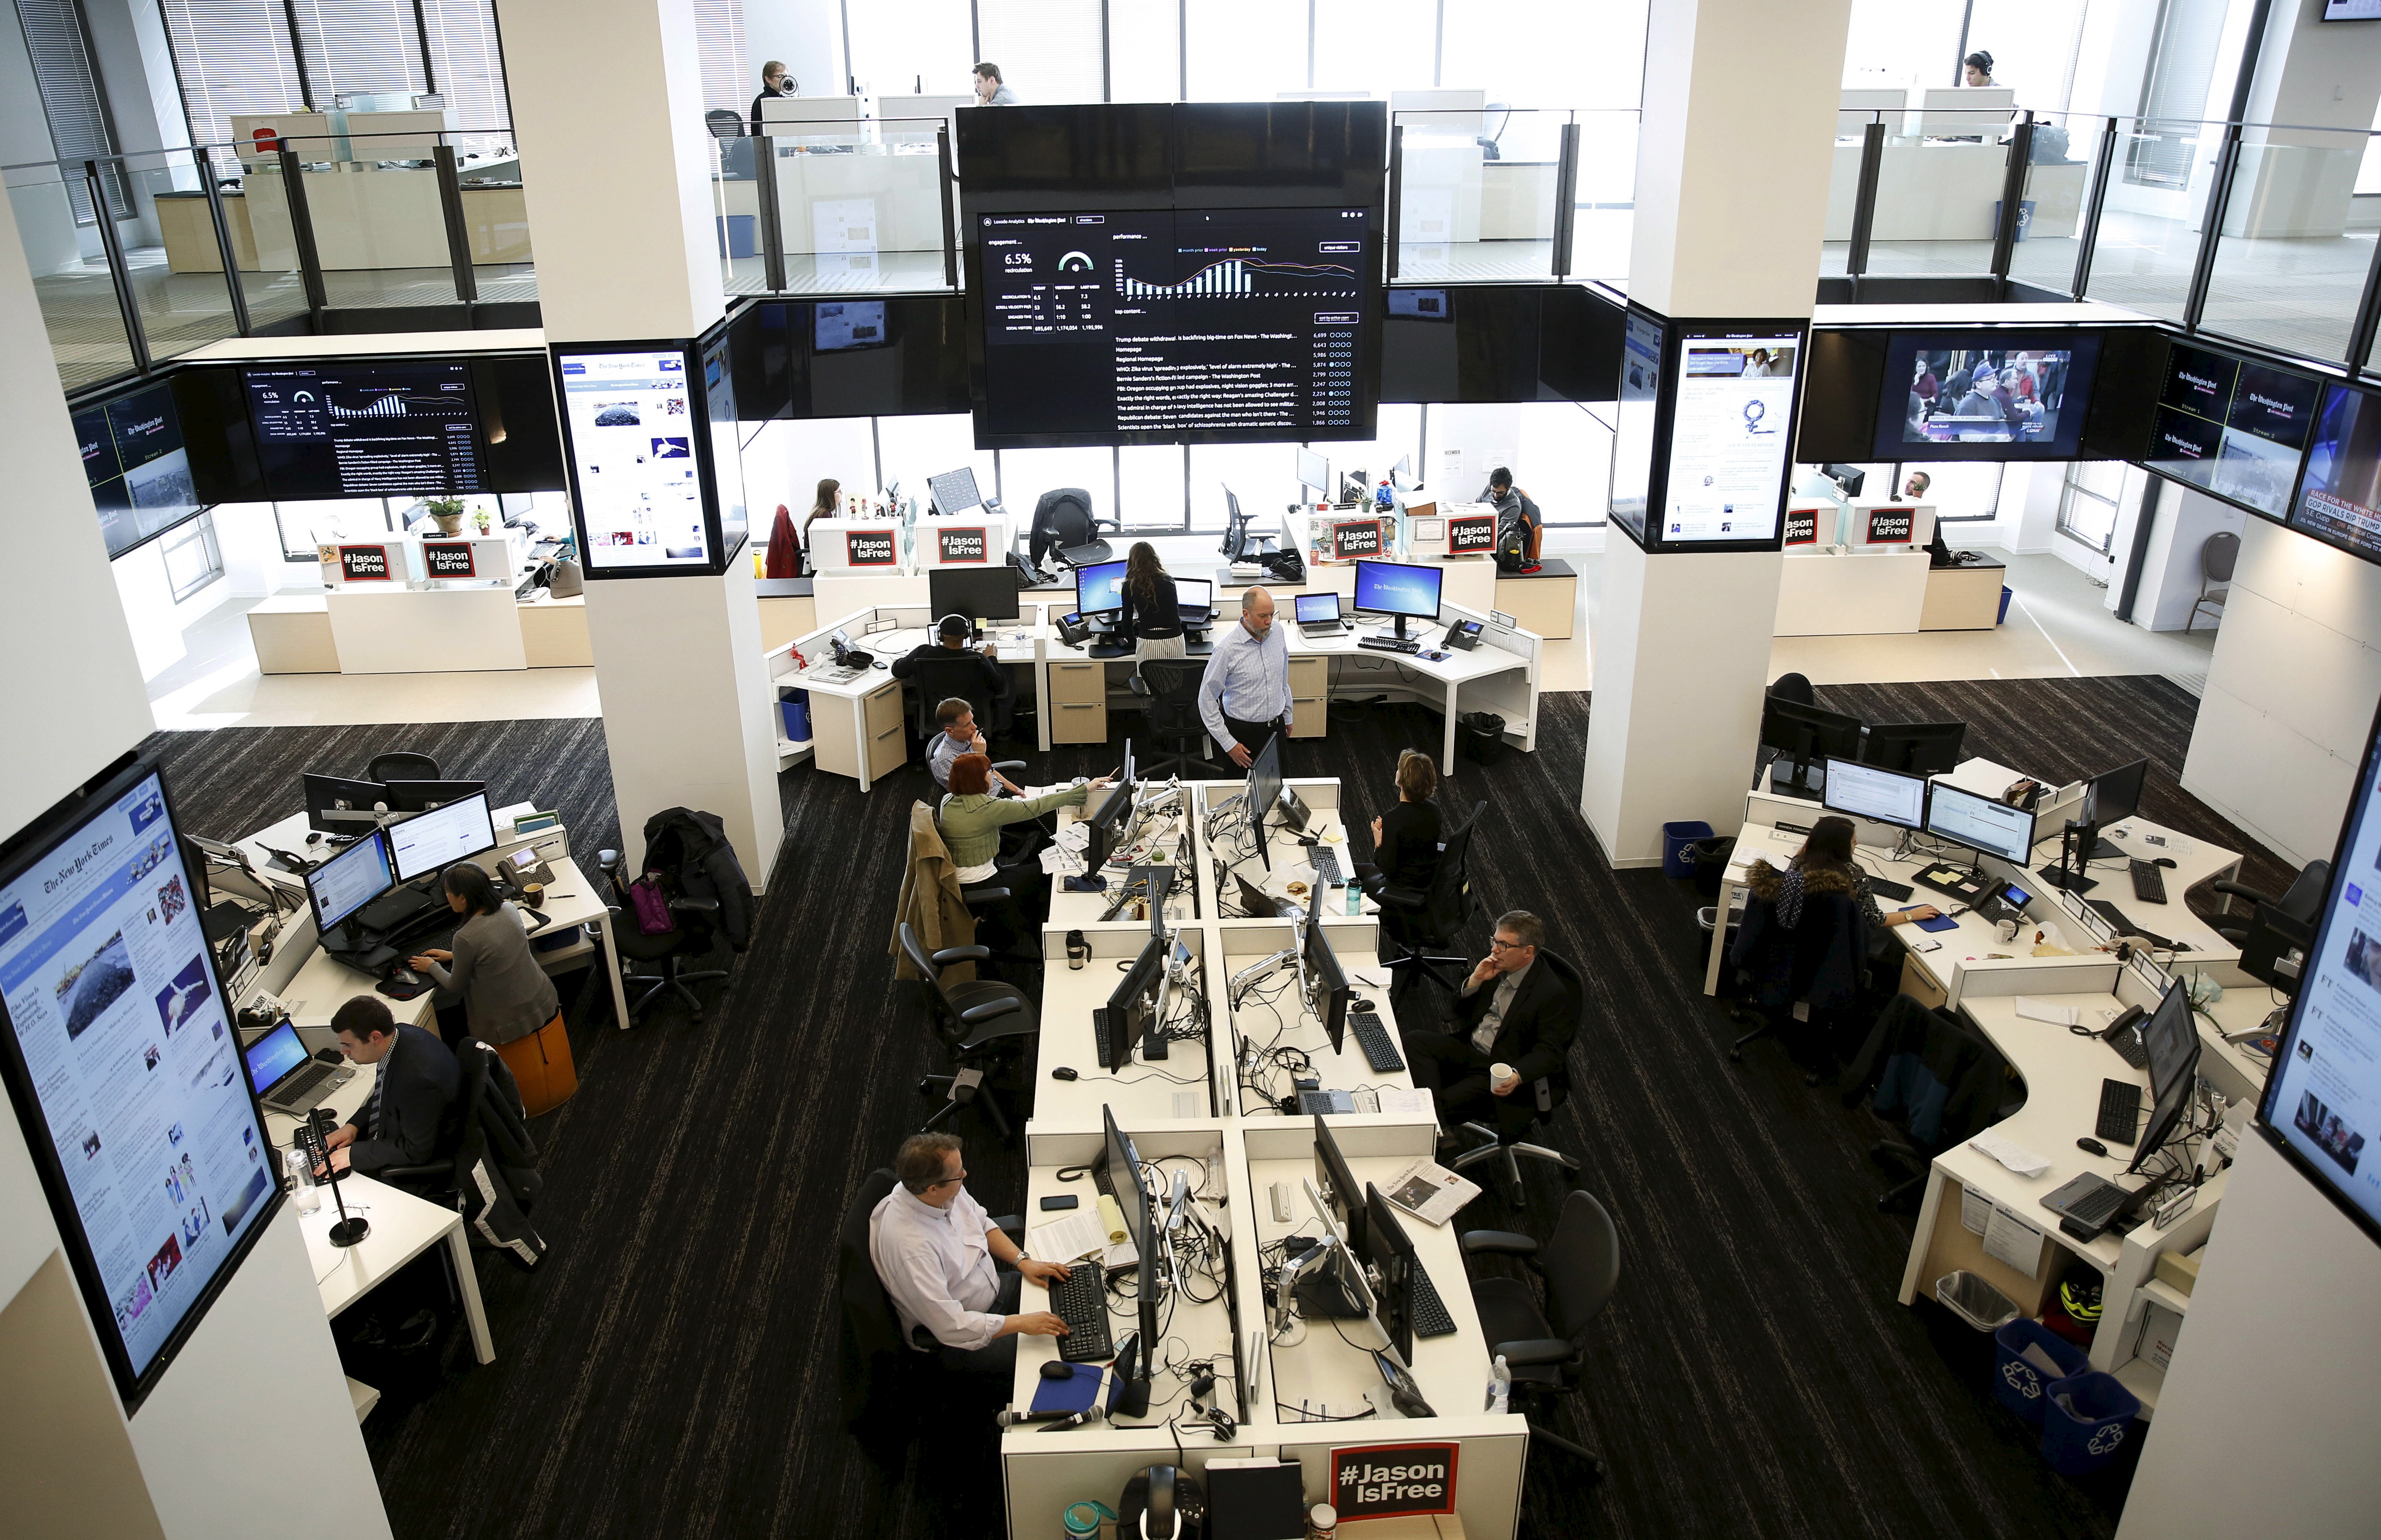 Newsroom floors are seen during grand opening of Washington Post in Washington